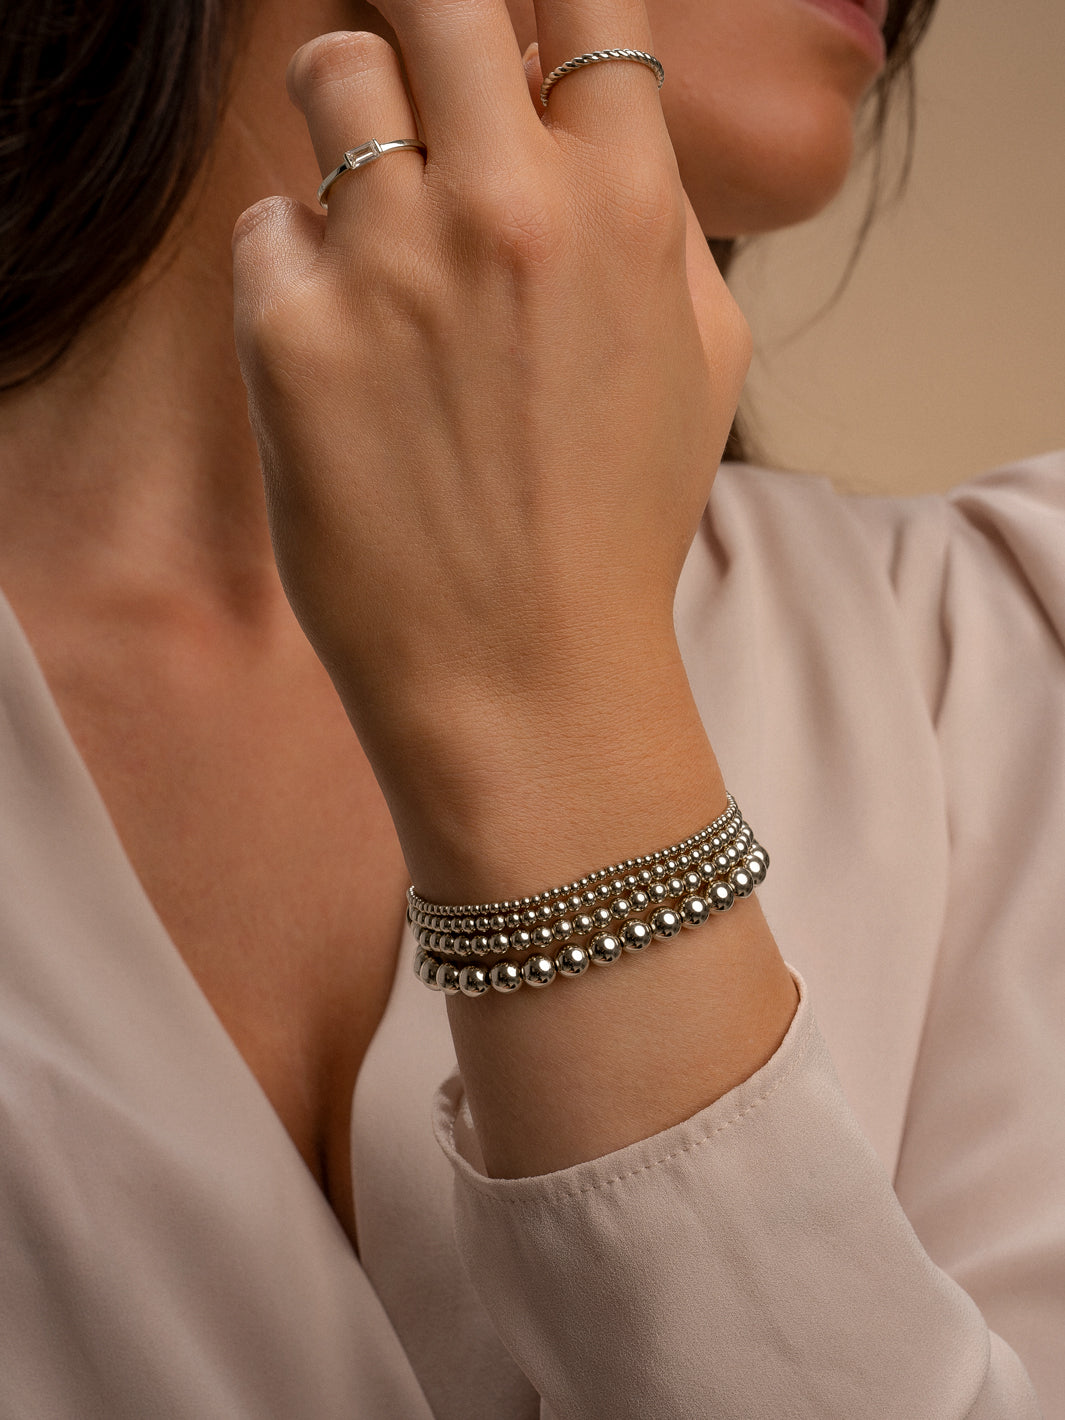 Saturn silver beads bracelet - 2mm